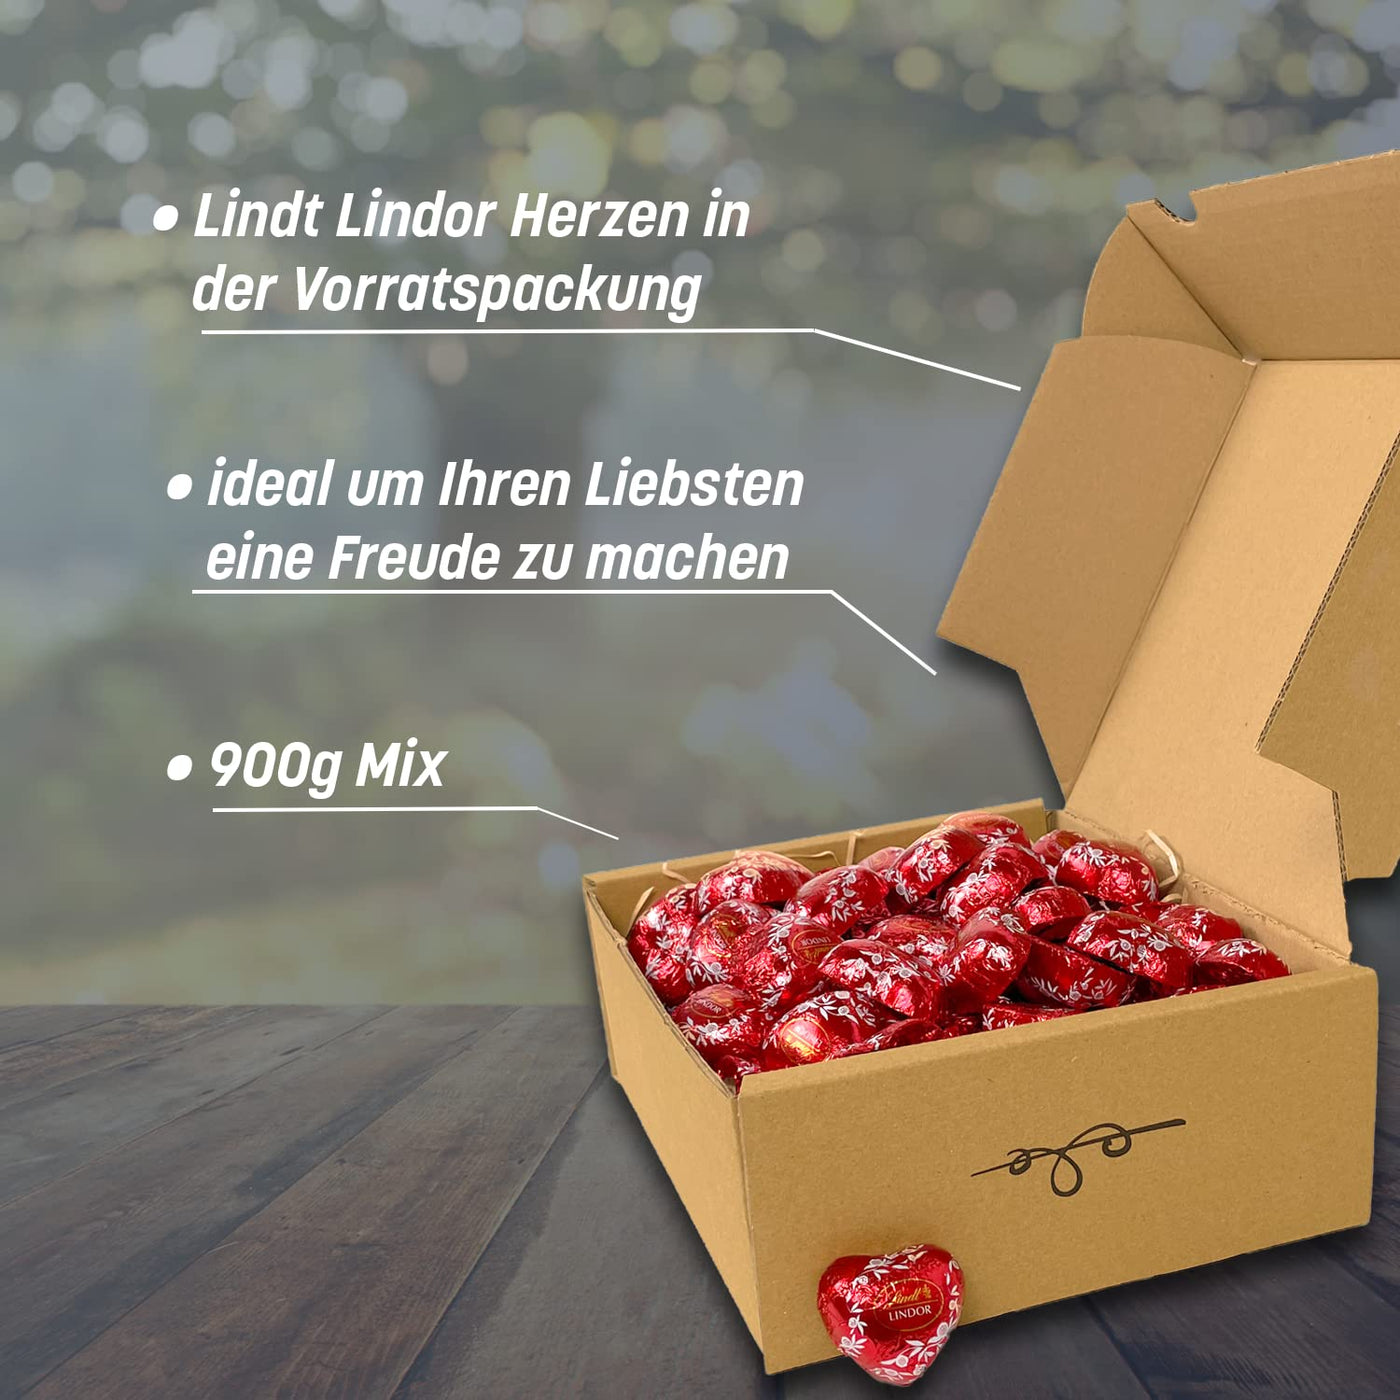 Genusslebenbox mit 900g Lindt Lindor Herzen, Ideal als Überraschung geeignet